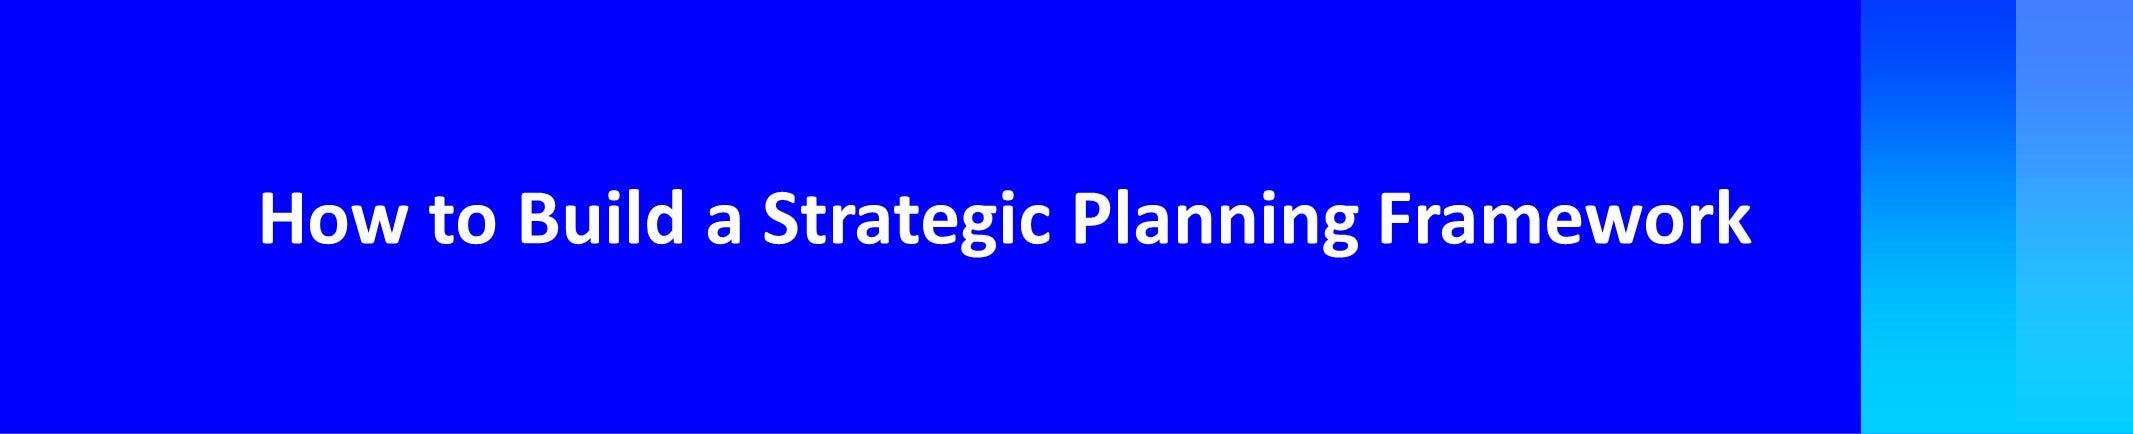 chart header about how to build strategic workforce planning framework